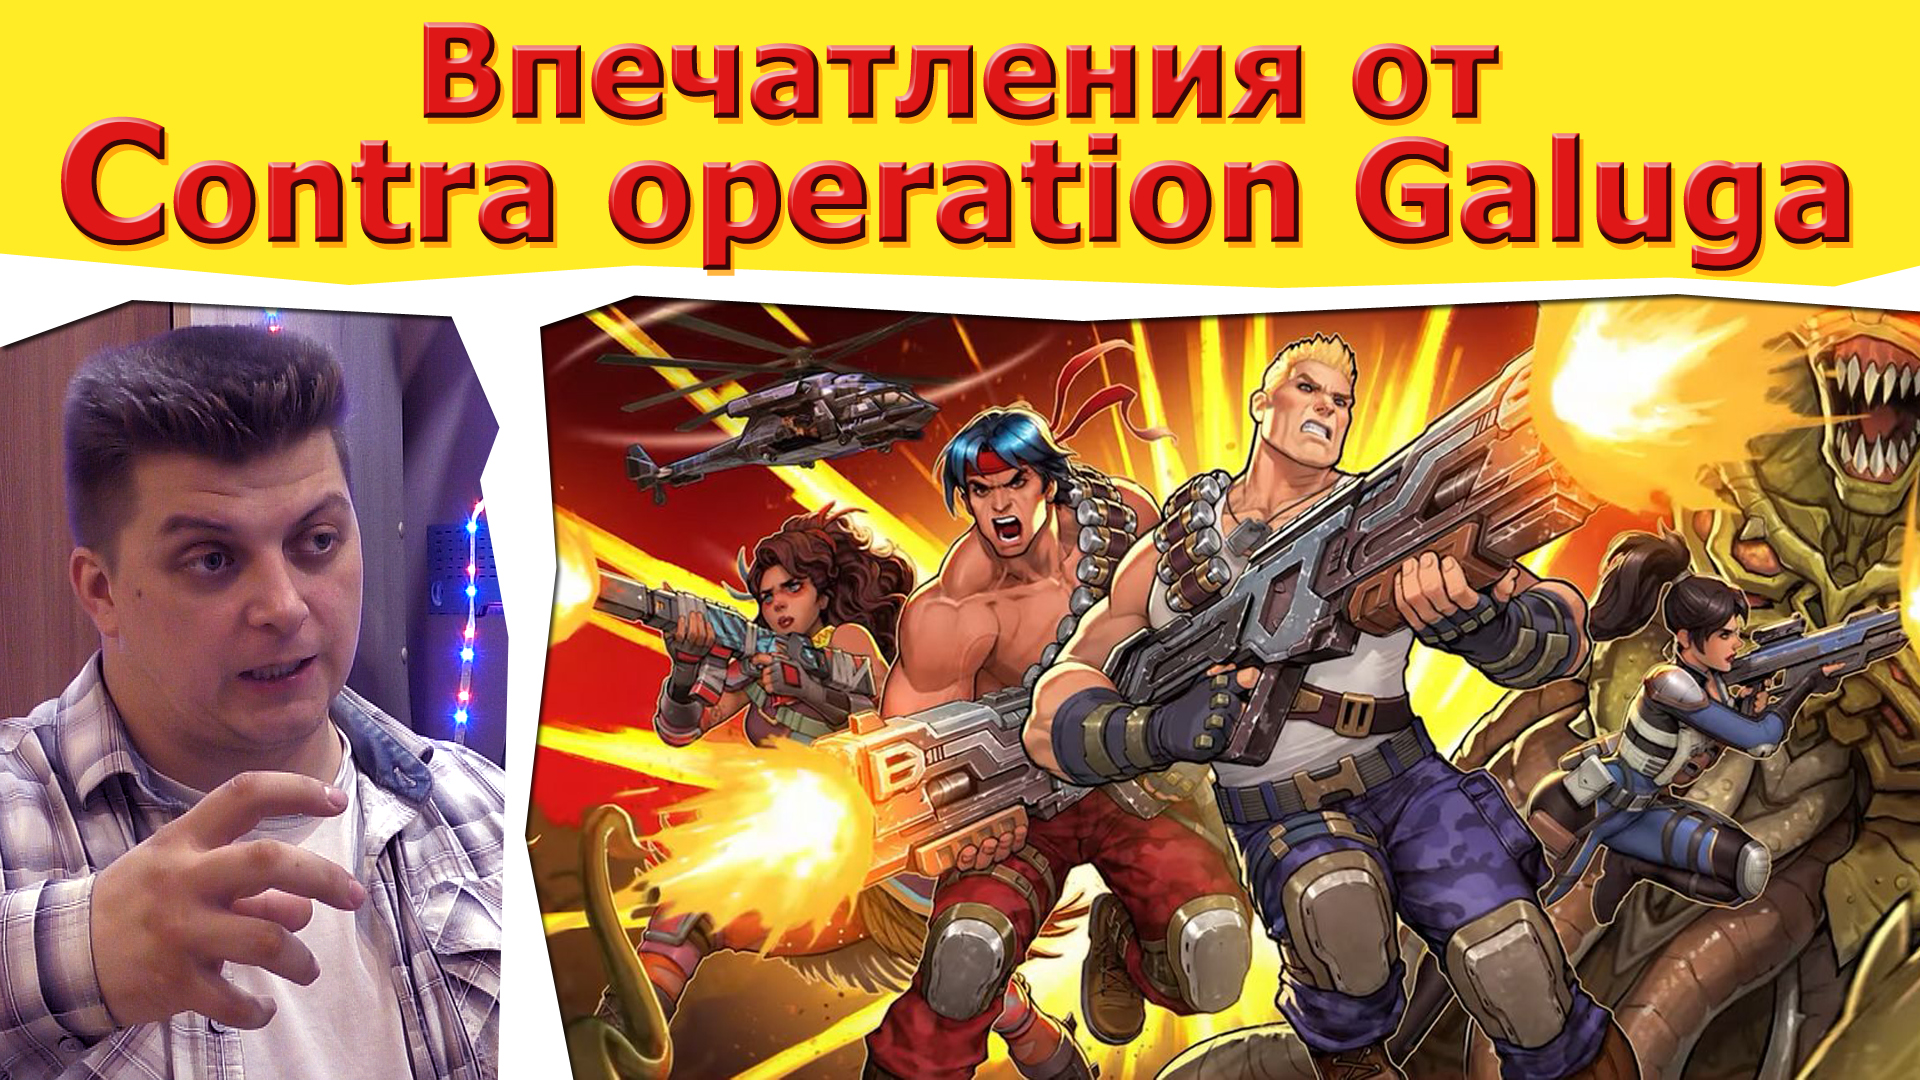 Contra galuga ps4. Contra: Operation Galuga. Contra: Operation Galuga девушки. Contra: Operation Galuga game. Contra Operation Galuga картинки.